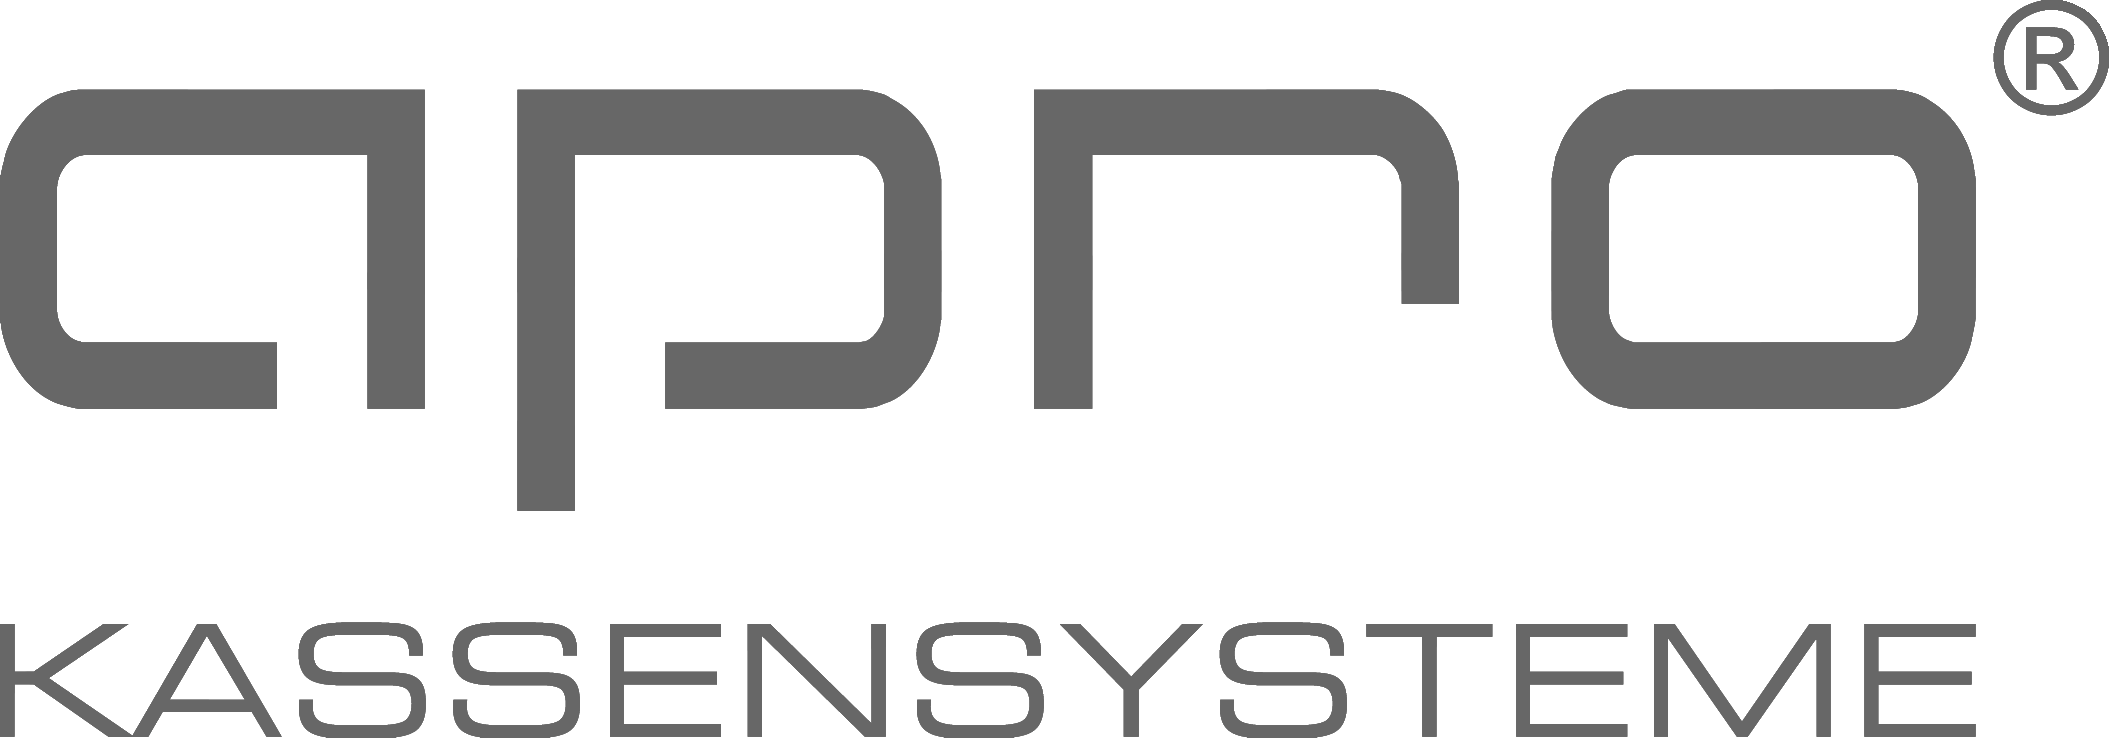 APRO POS Systems logo